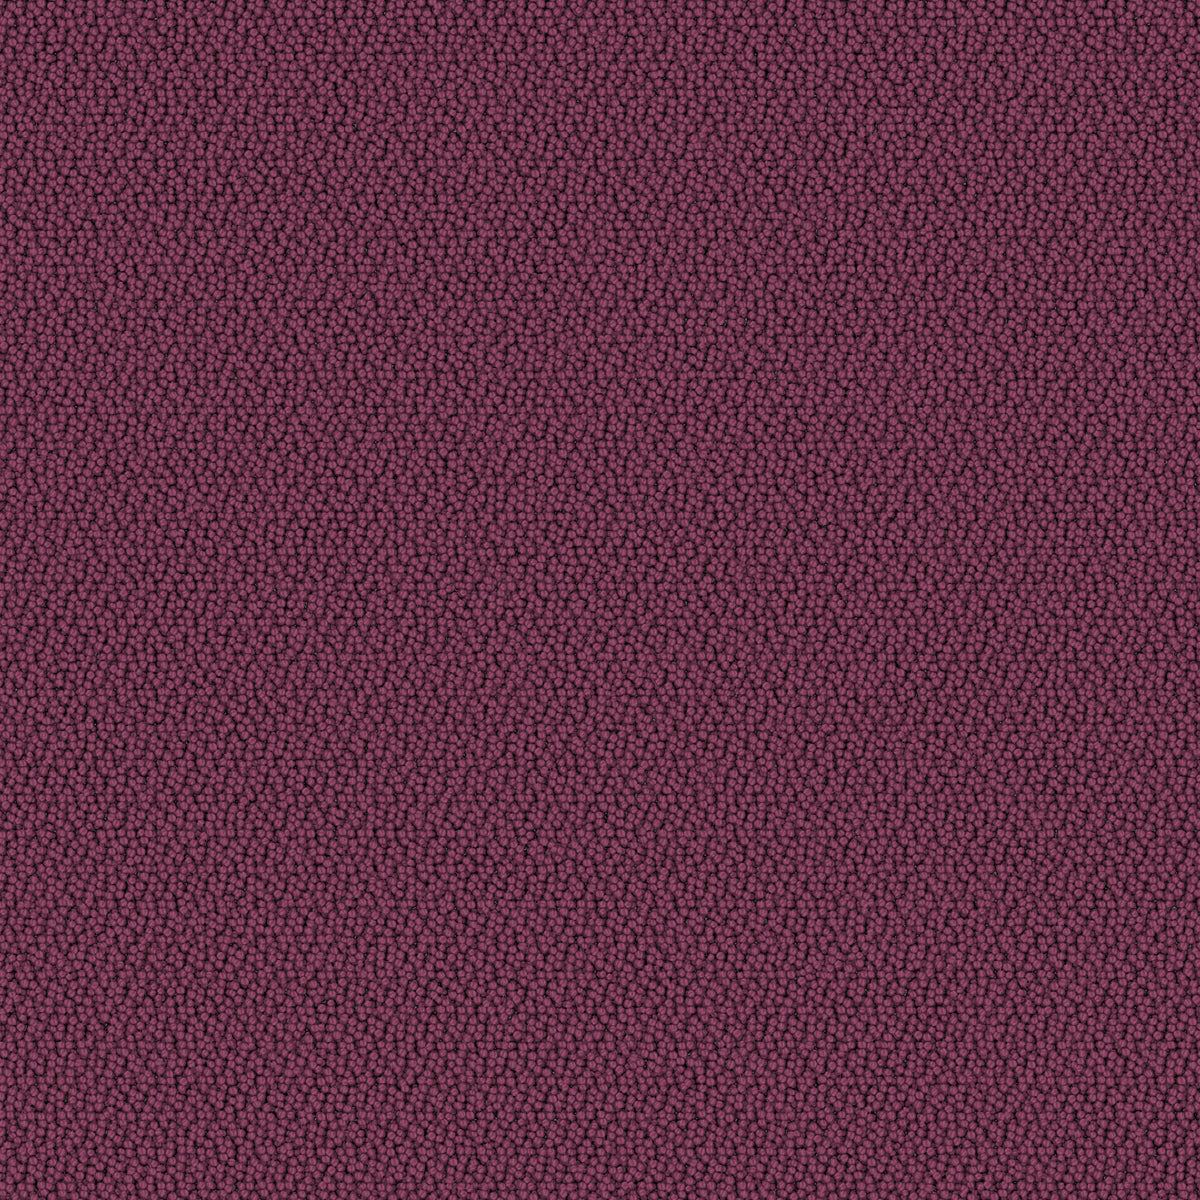 Mohawk Group - Colorbeat - Carpet Tile - Kaleidoscope